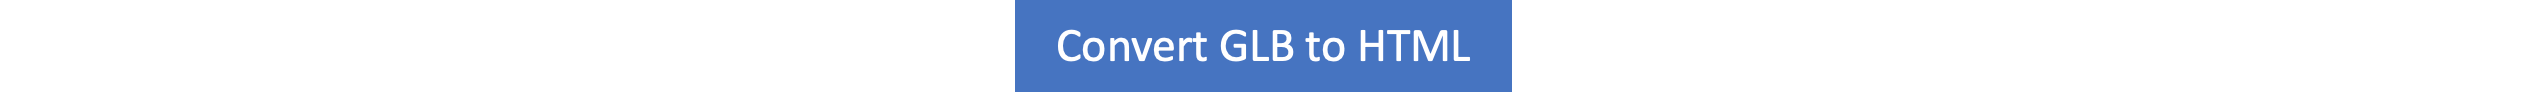 GLB zu HTML